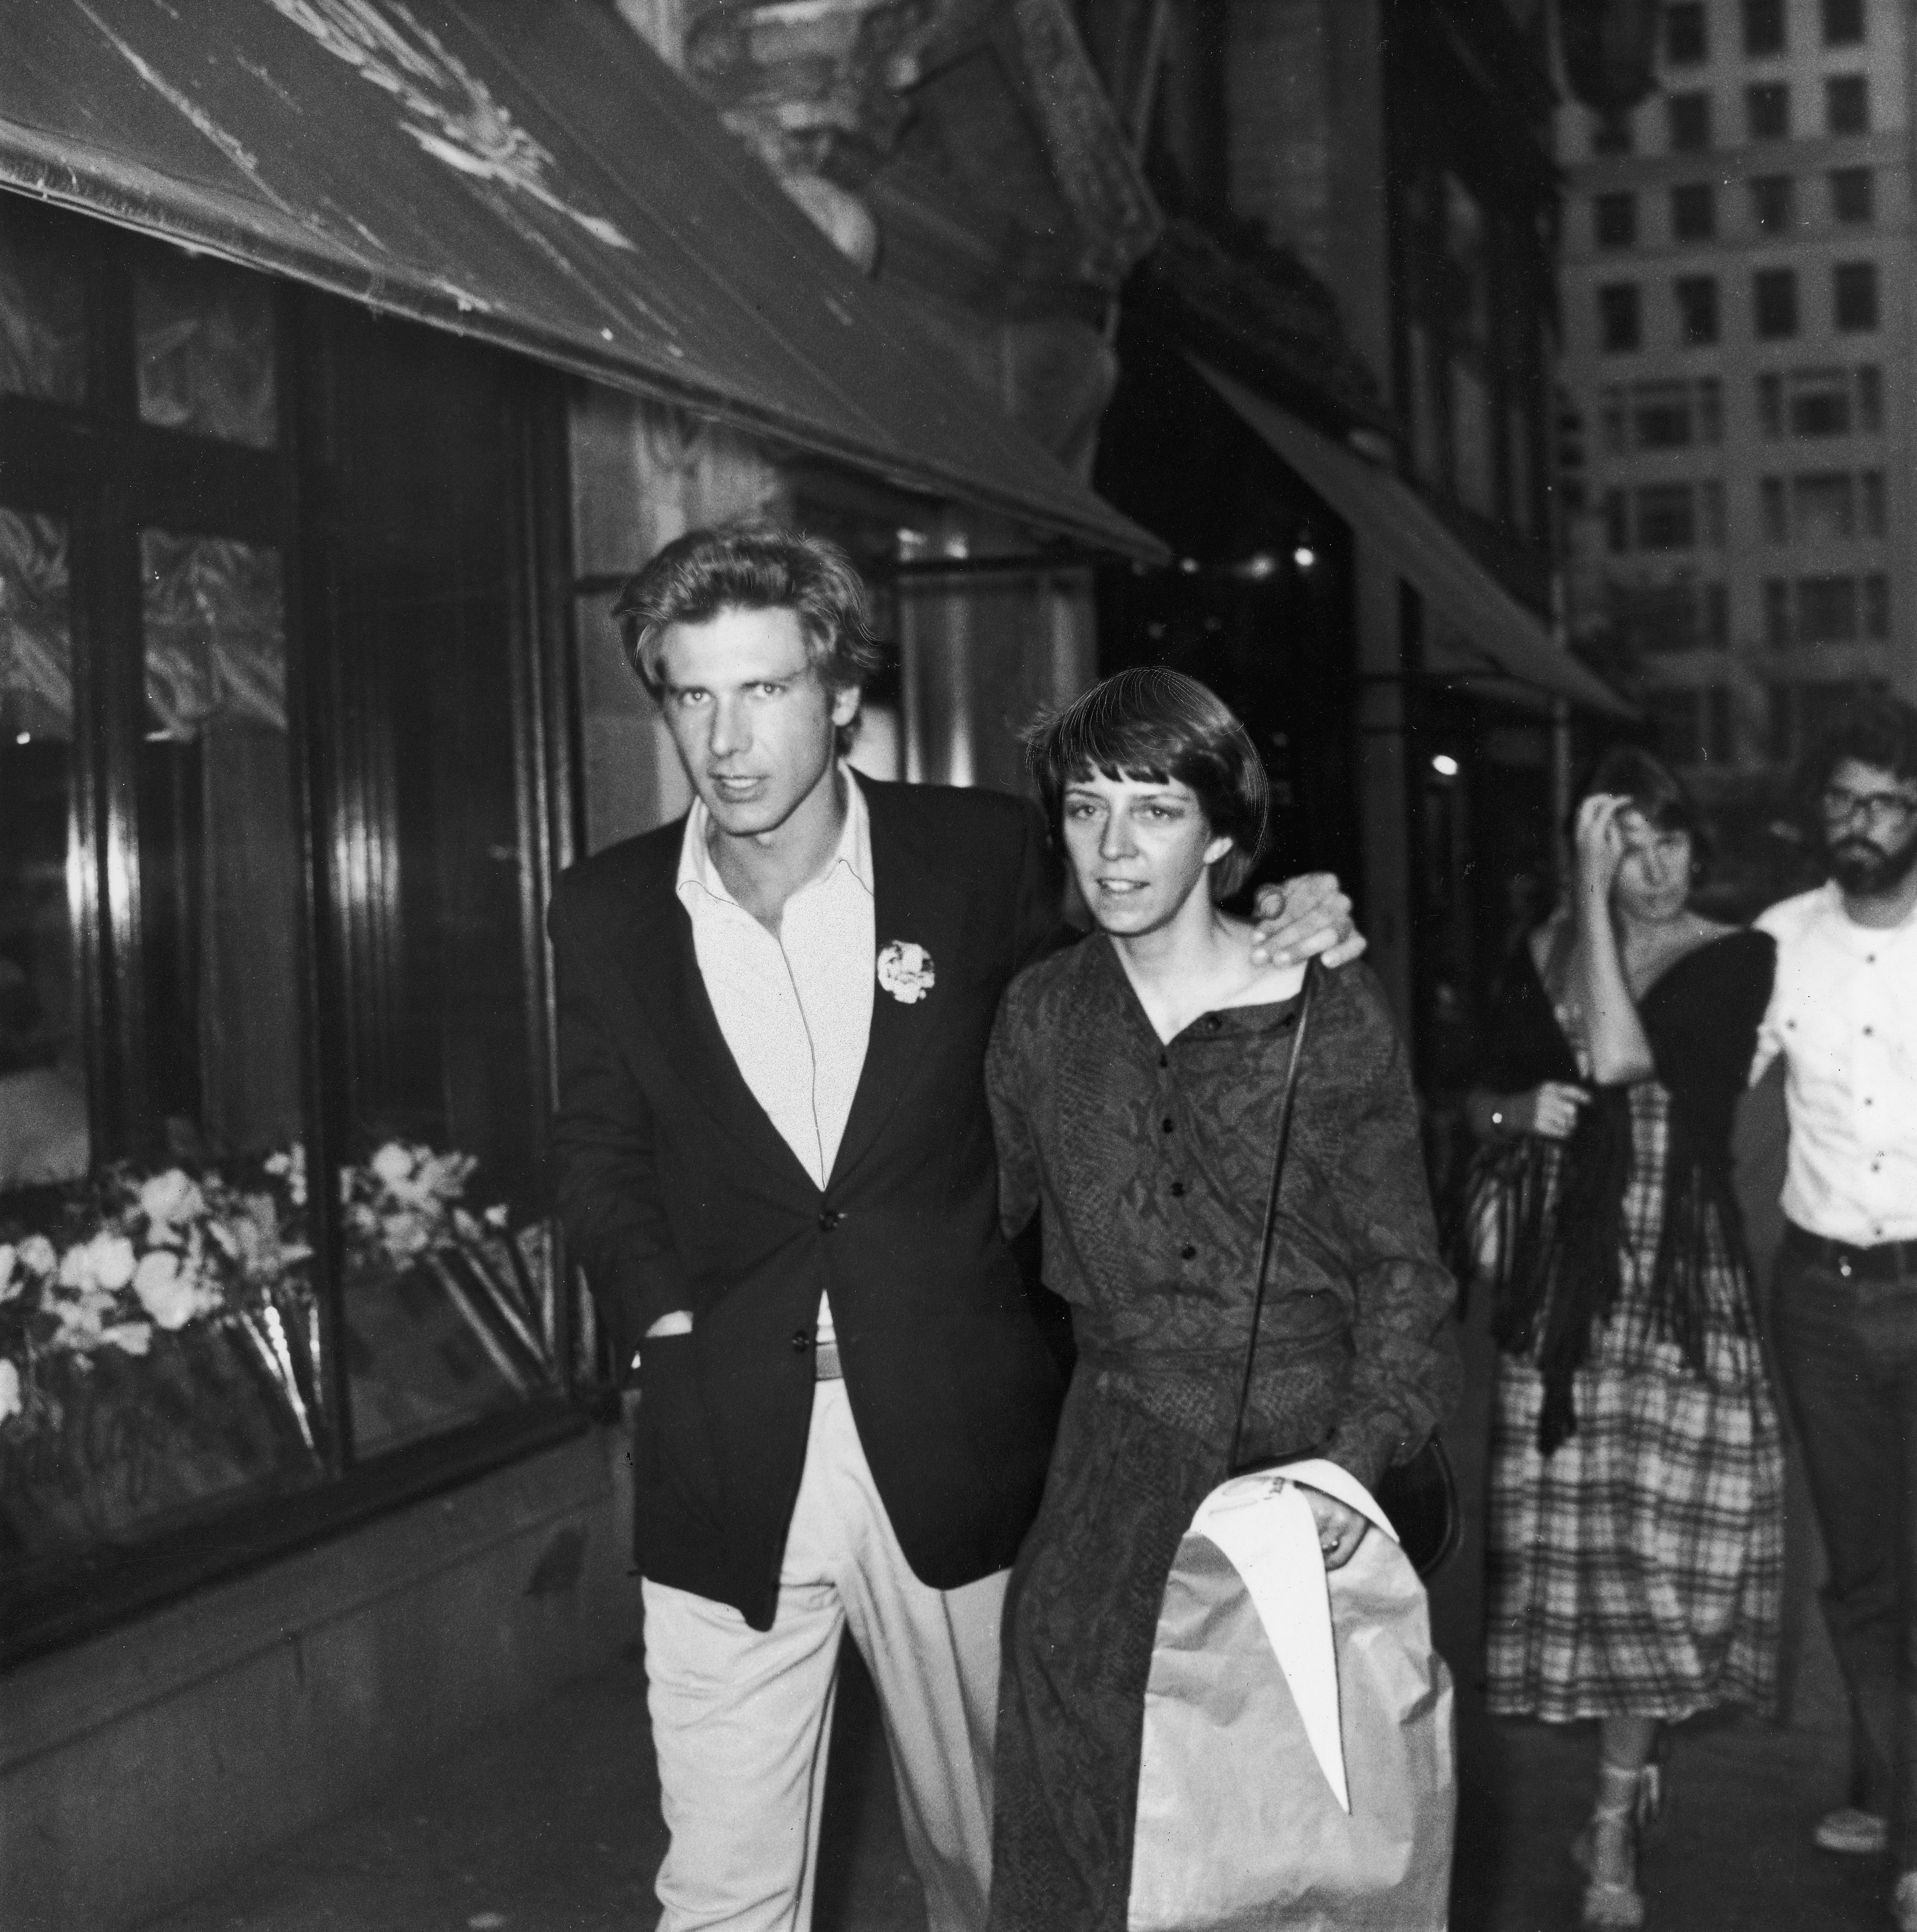 Harrison Ford ve Mary Marquardt, Haziran 1977'de New York'ta sokakta yürürken.  |  Kaynak: Getty Images